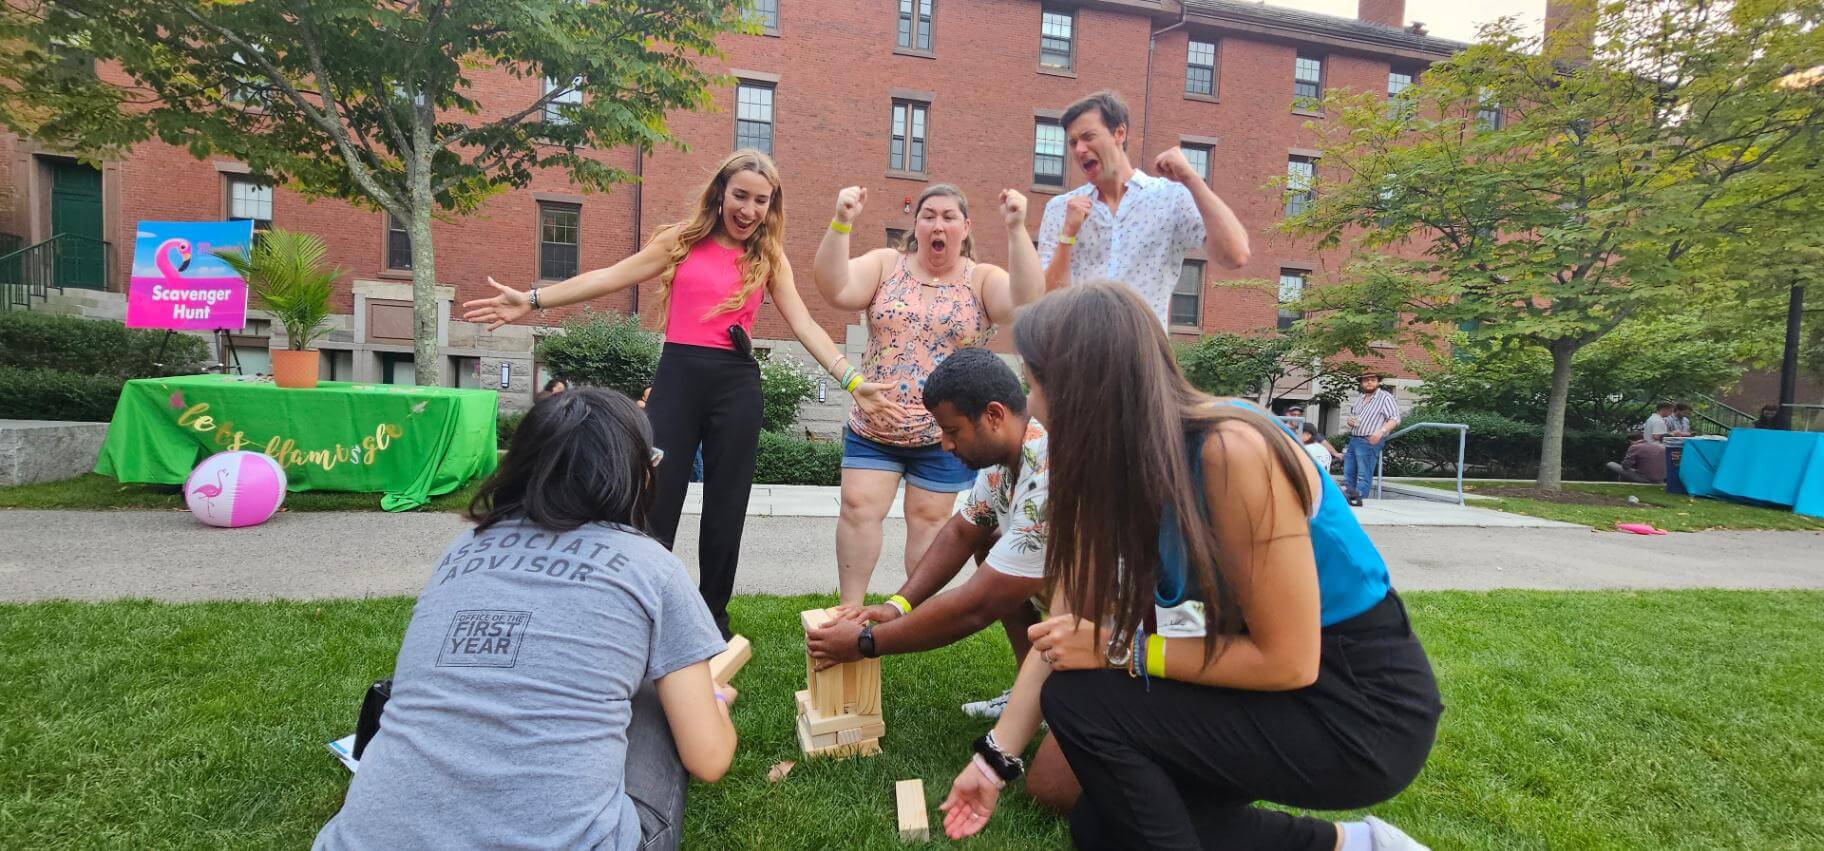 A group of people playing jenga outside